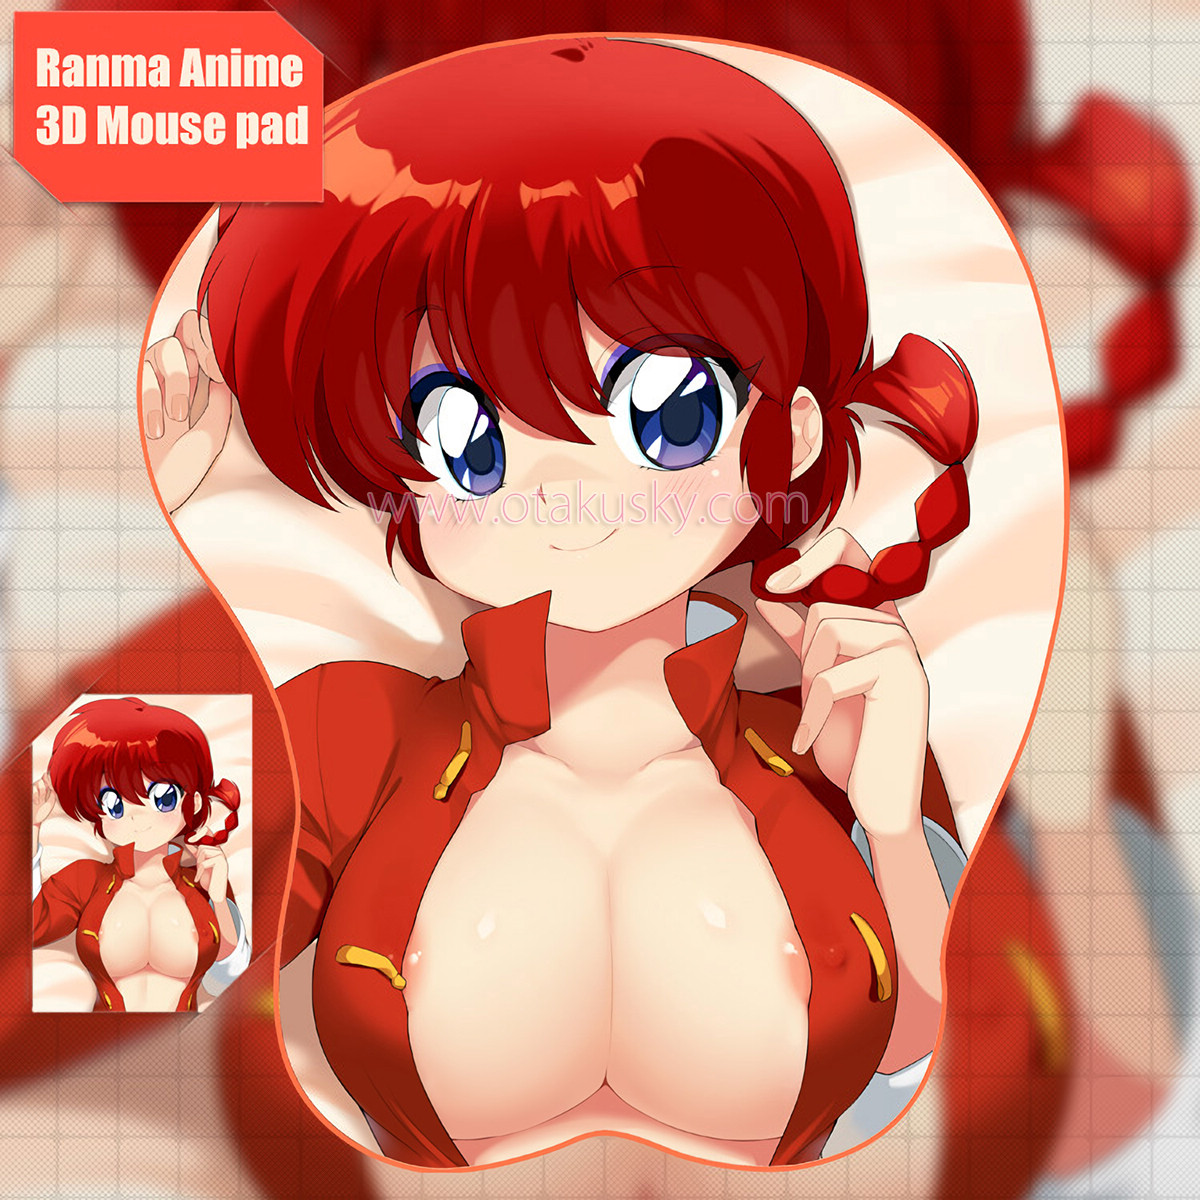 2way Ranma 1/2 Ranma Anime 3D Mouse Pad Mat Wrist Rest